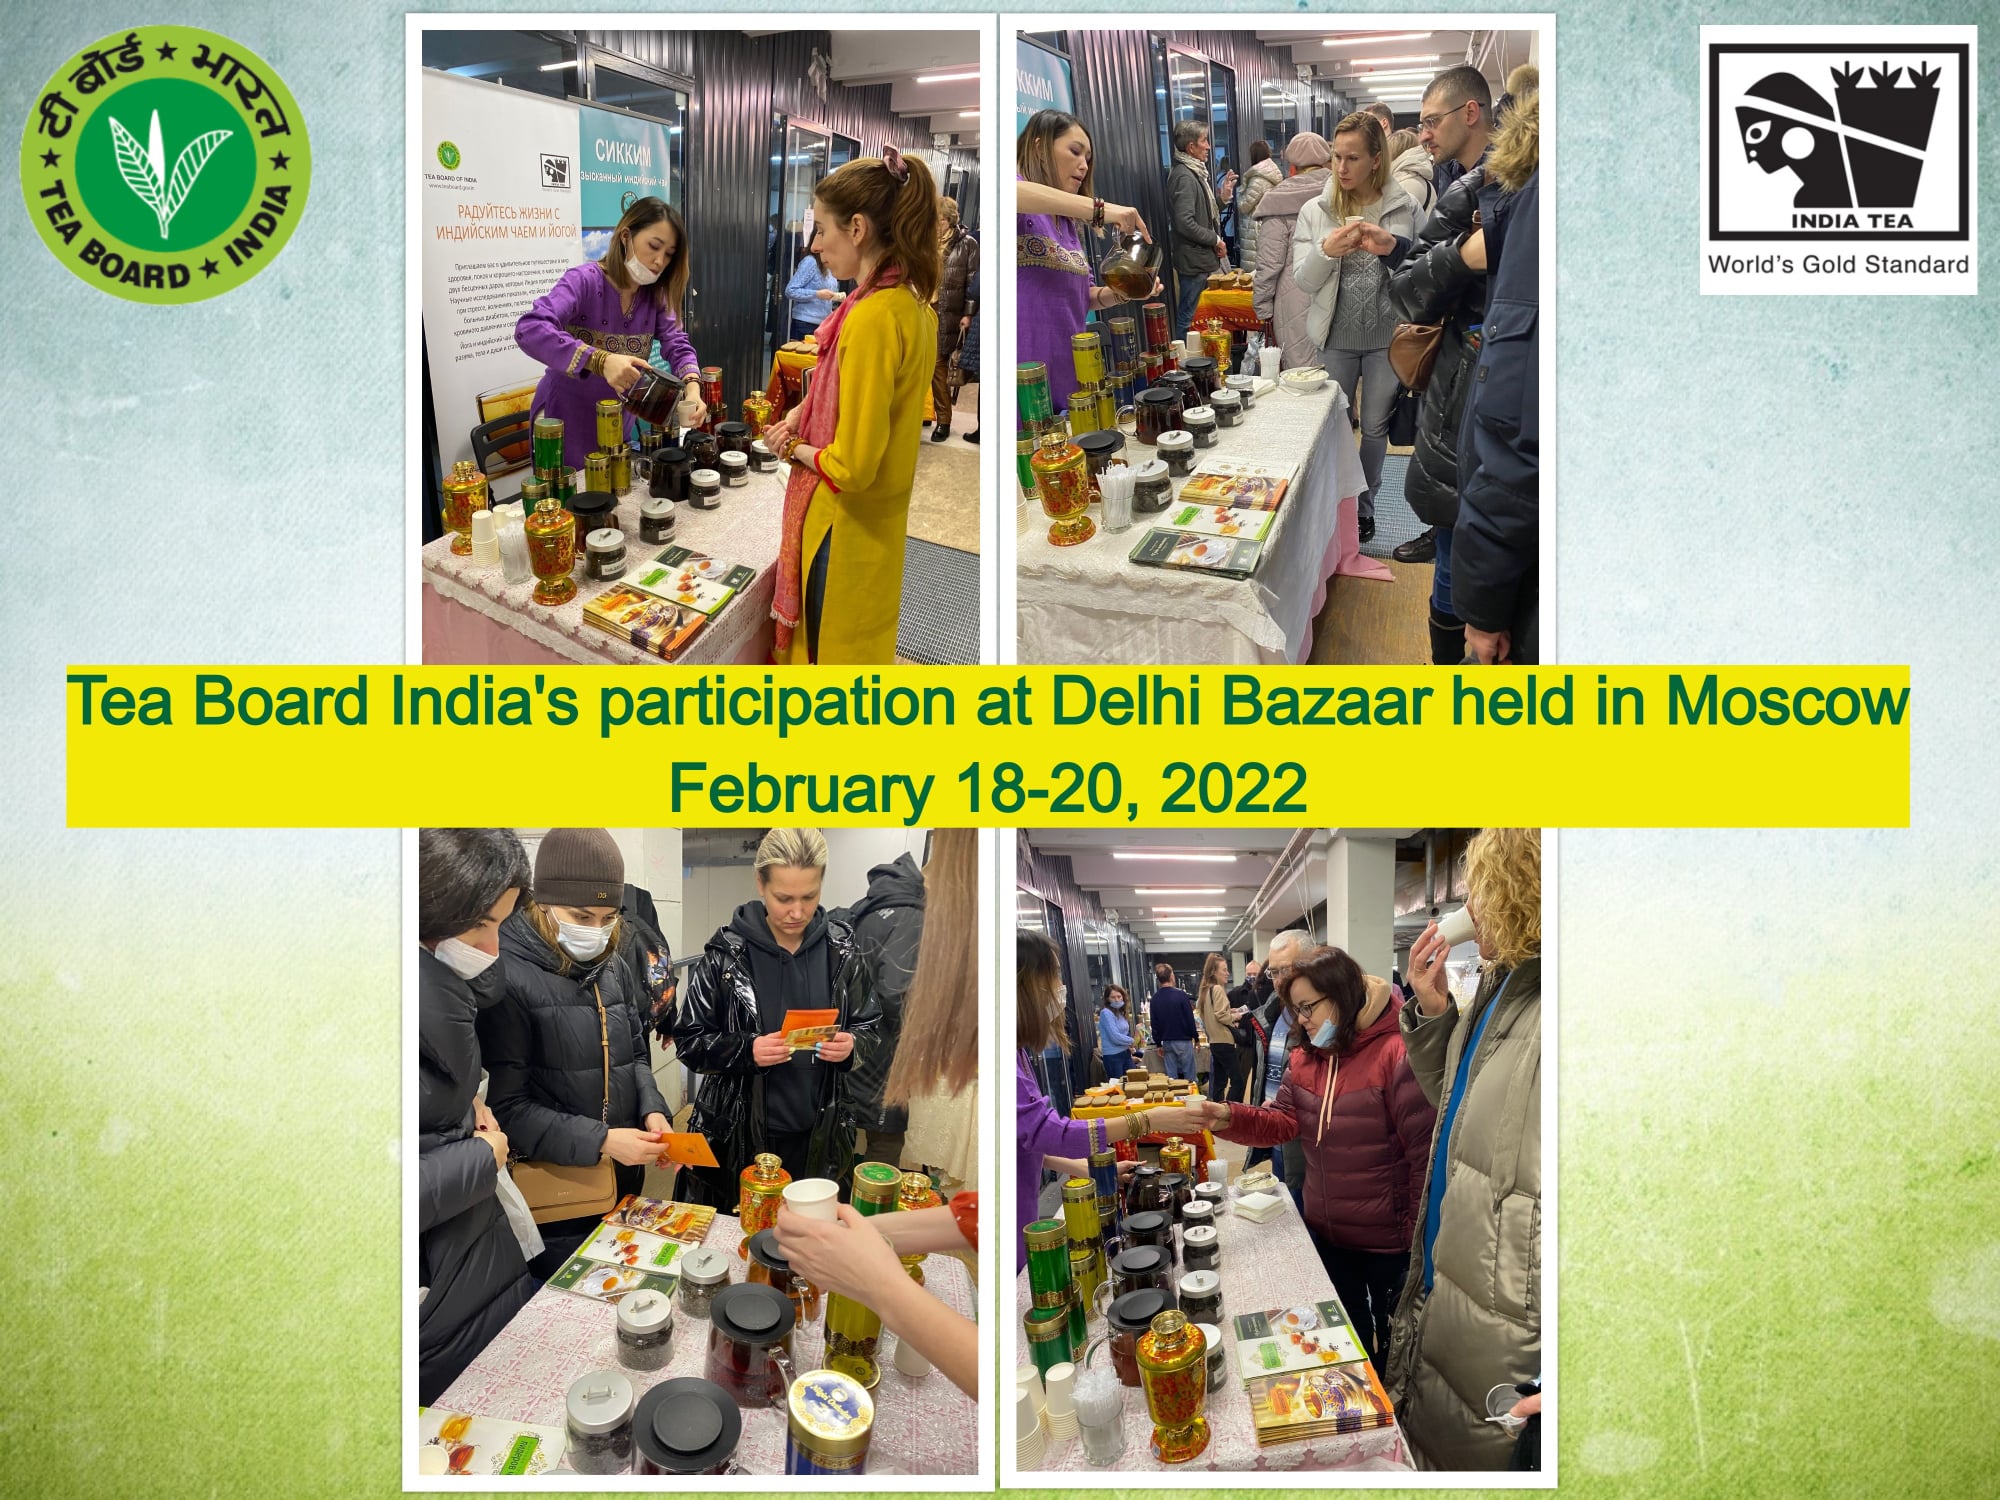 Tea Board India's participation at Delhi Bazaar held in Moscow, February 18-20, 2022